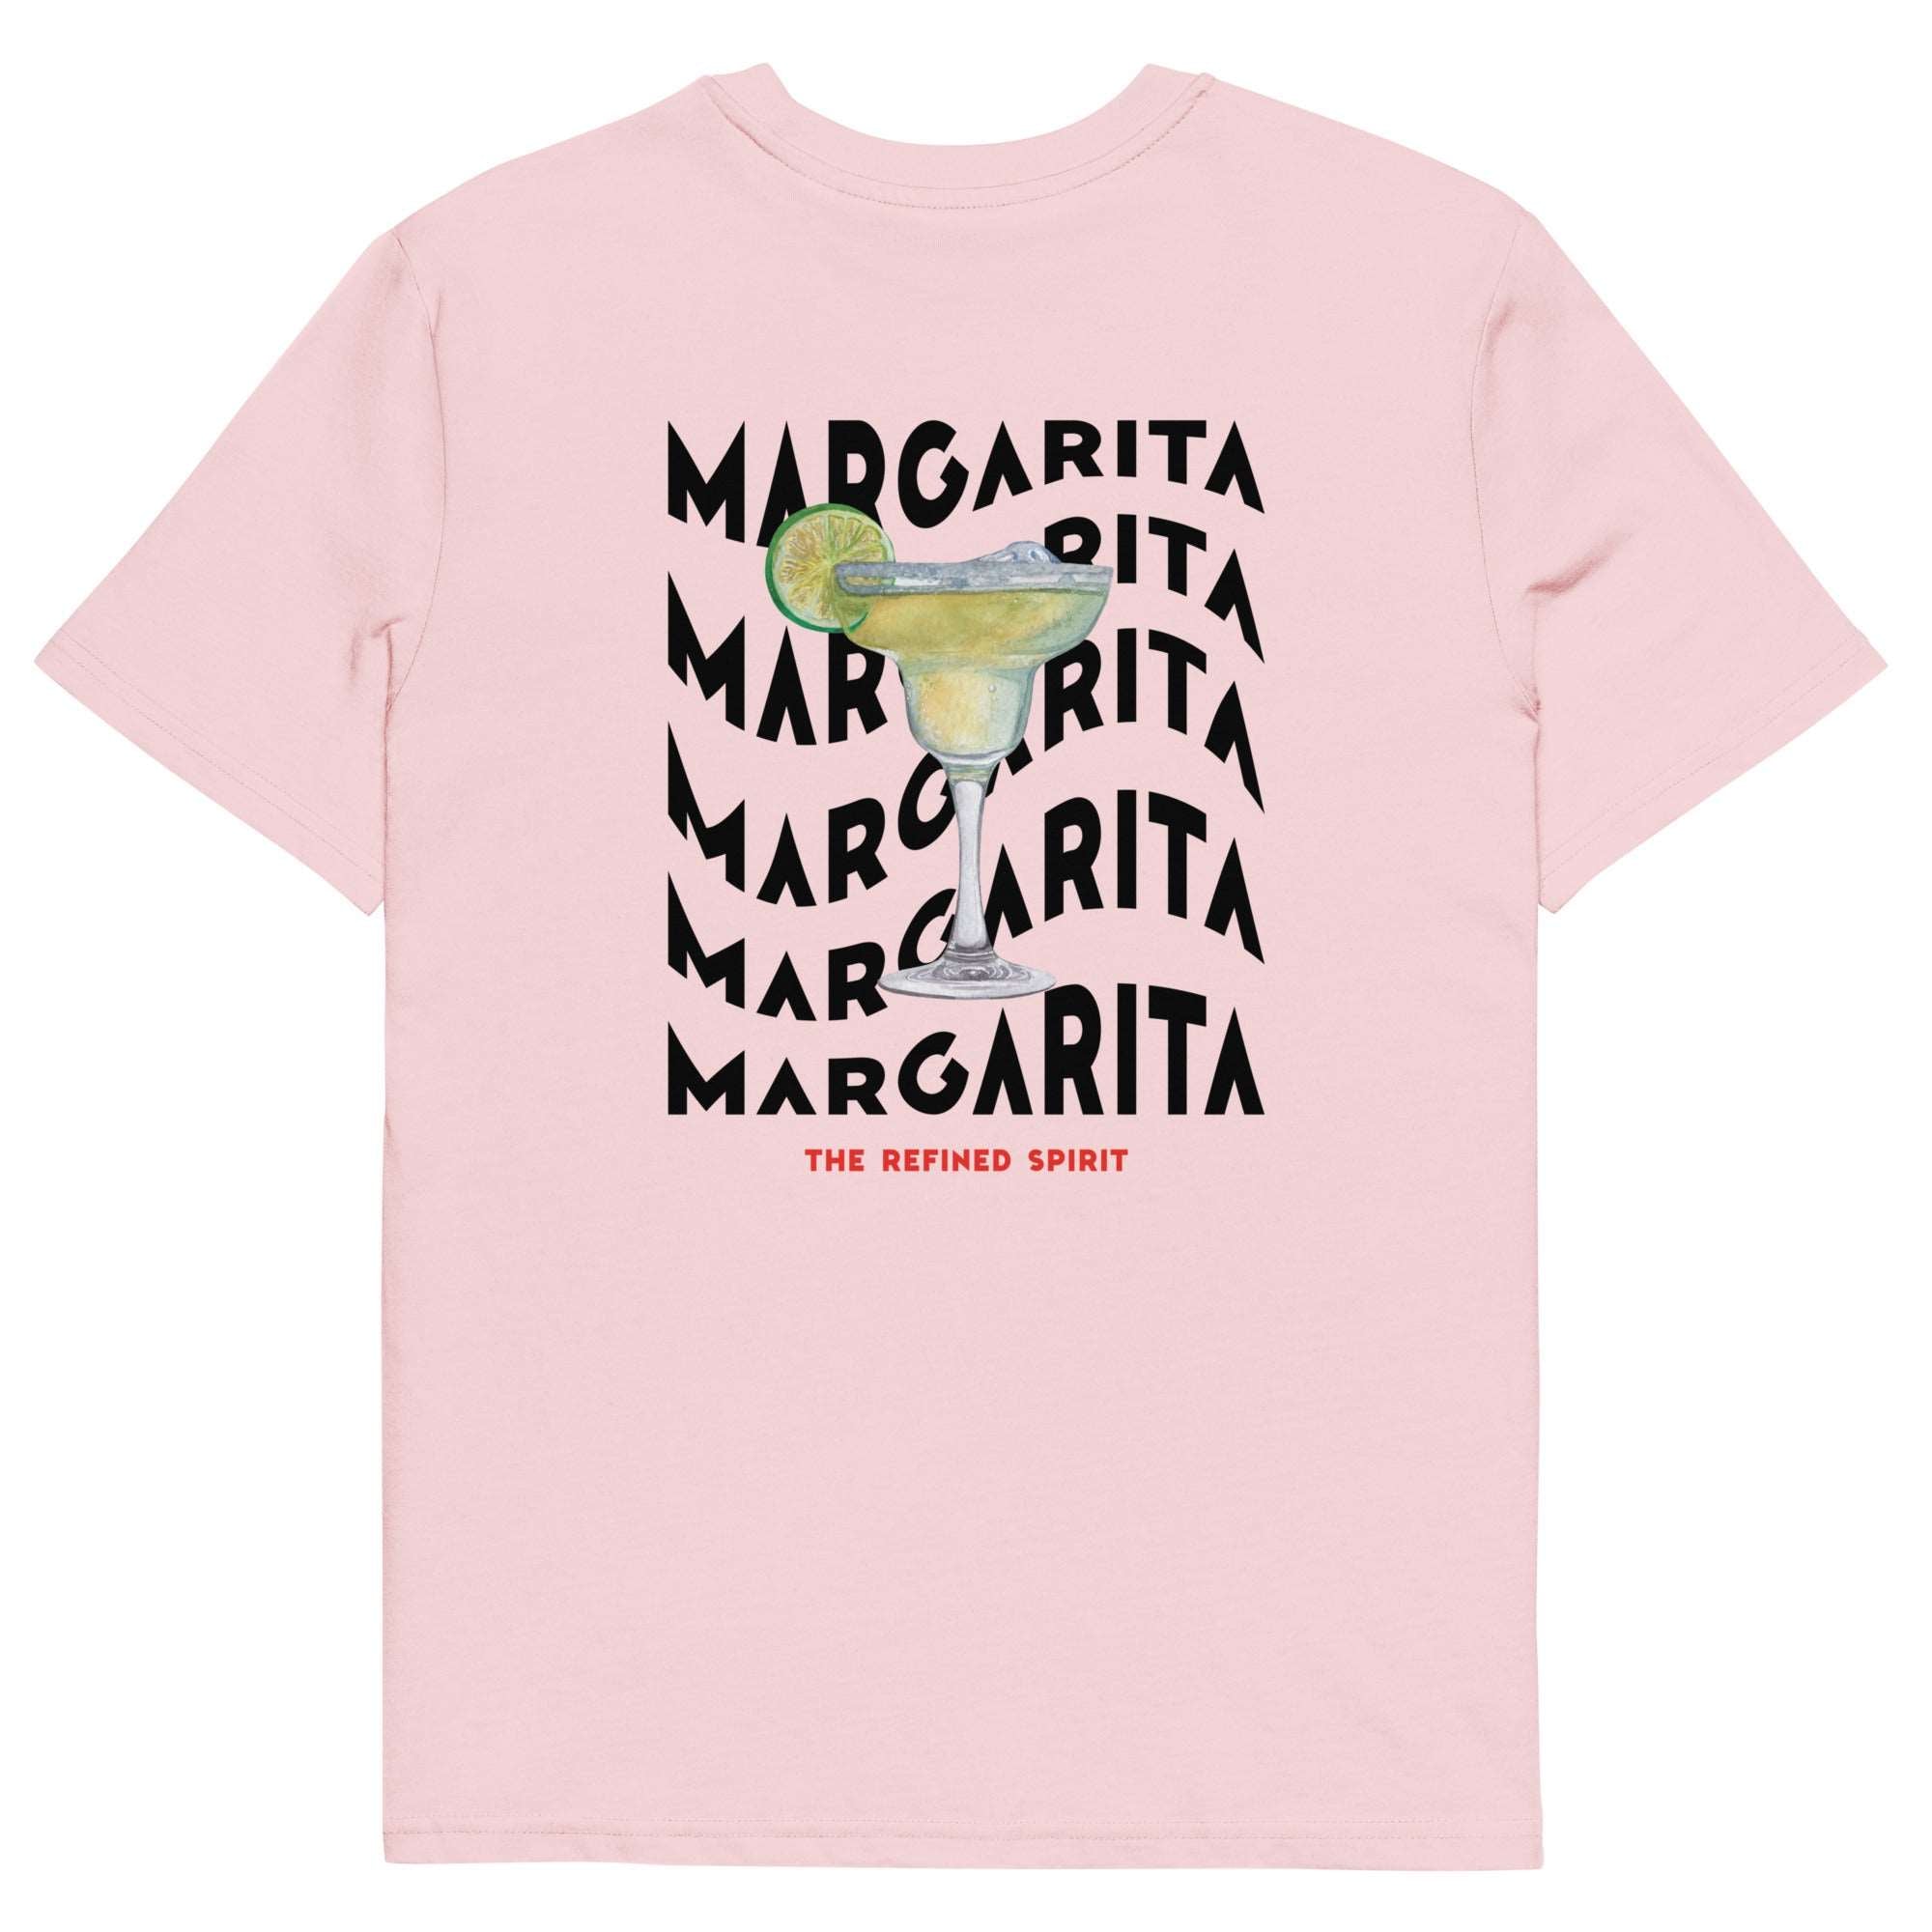 Waving Margarita - Organic T-shirt